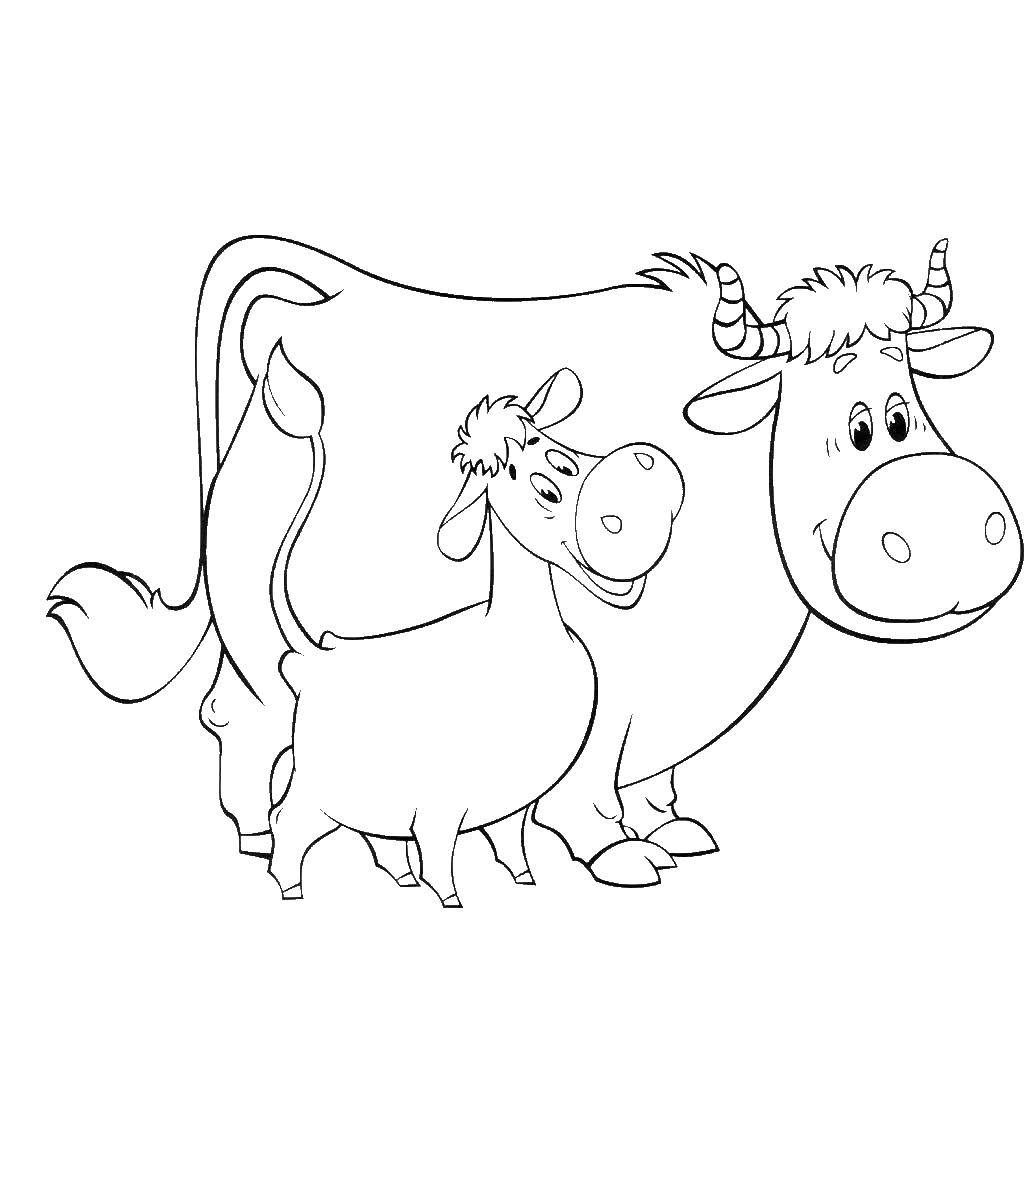 Название: Раскраска Корова мурка и теленок гаврюша. Категория: раскраски простоквашино. Теги: корова мурка, теленок гаврюша.